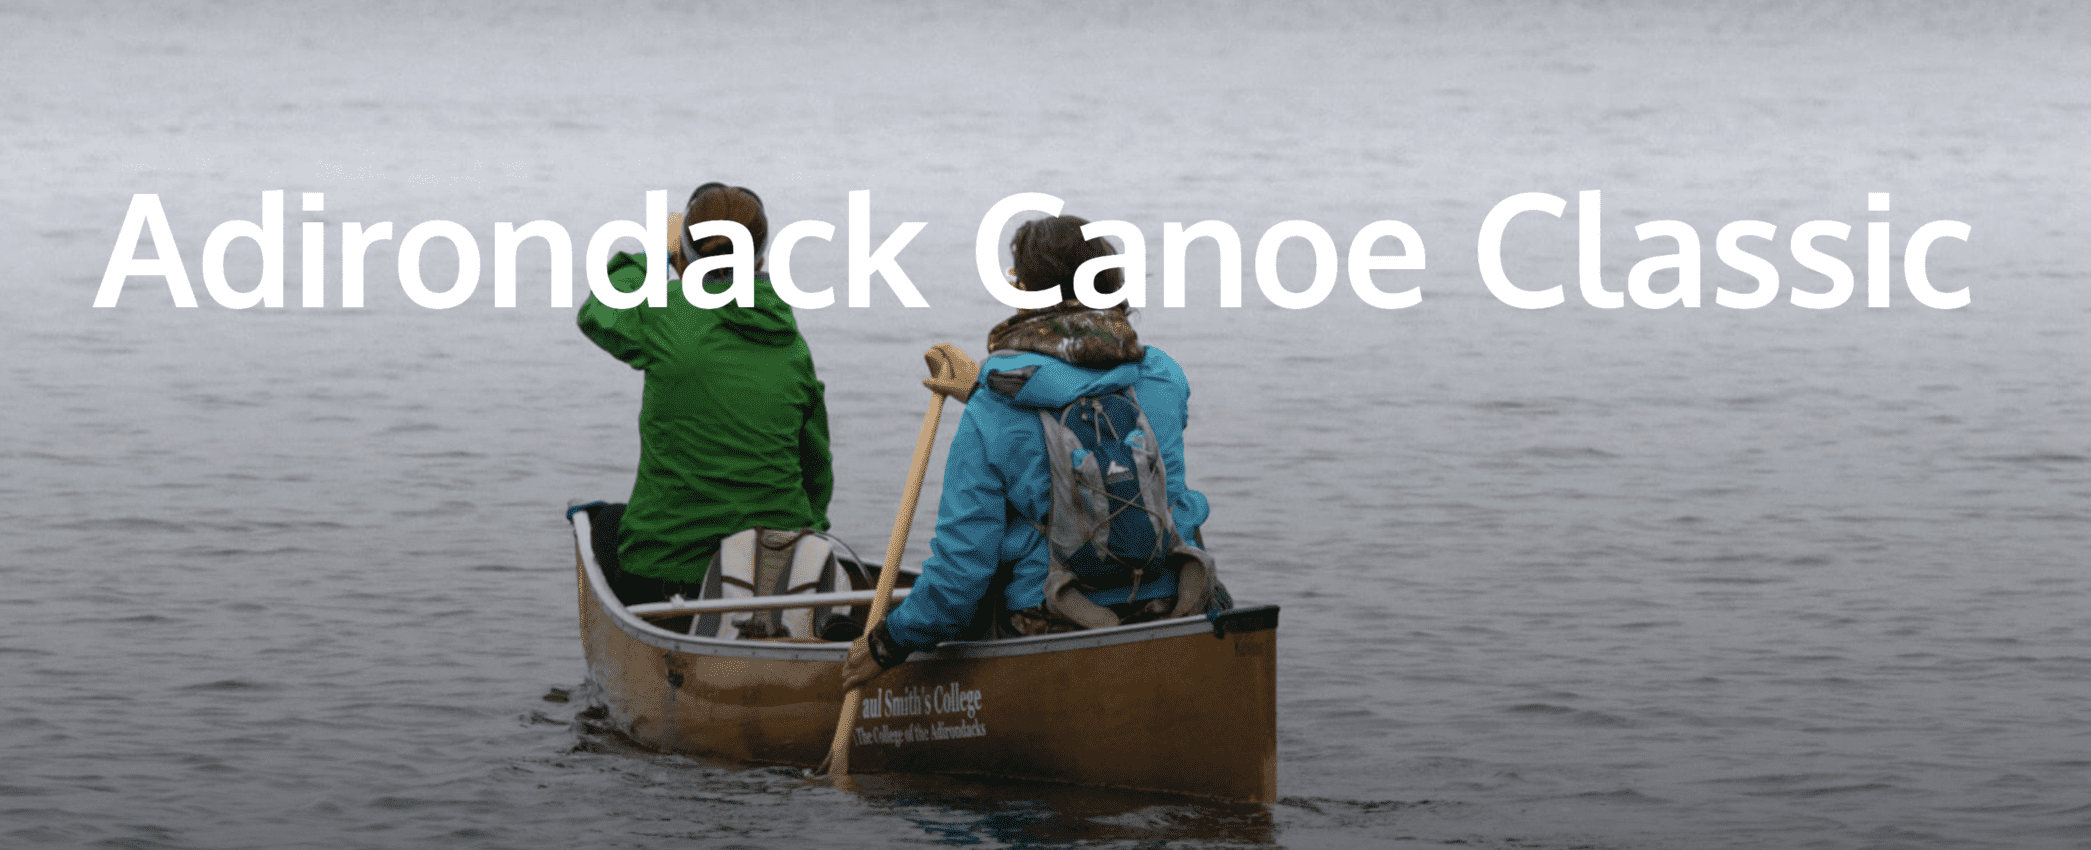 Canoe Classic